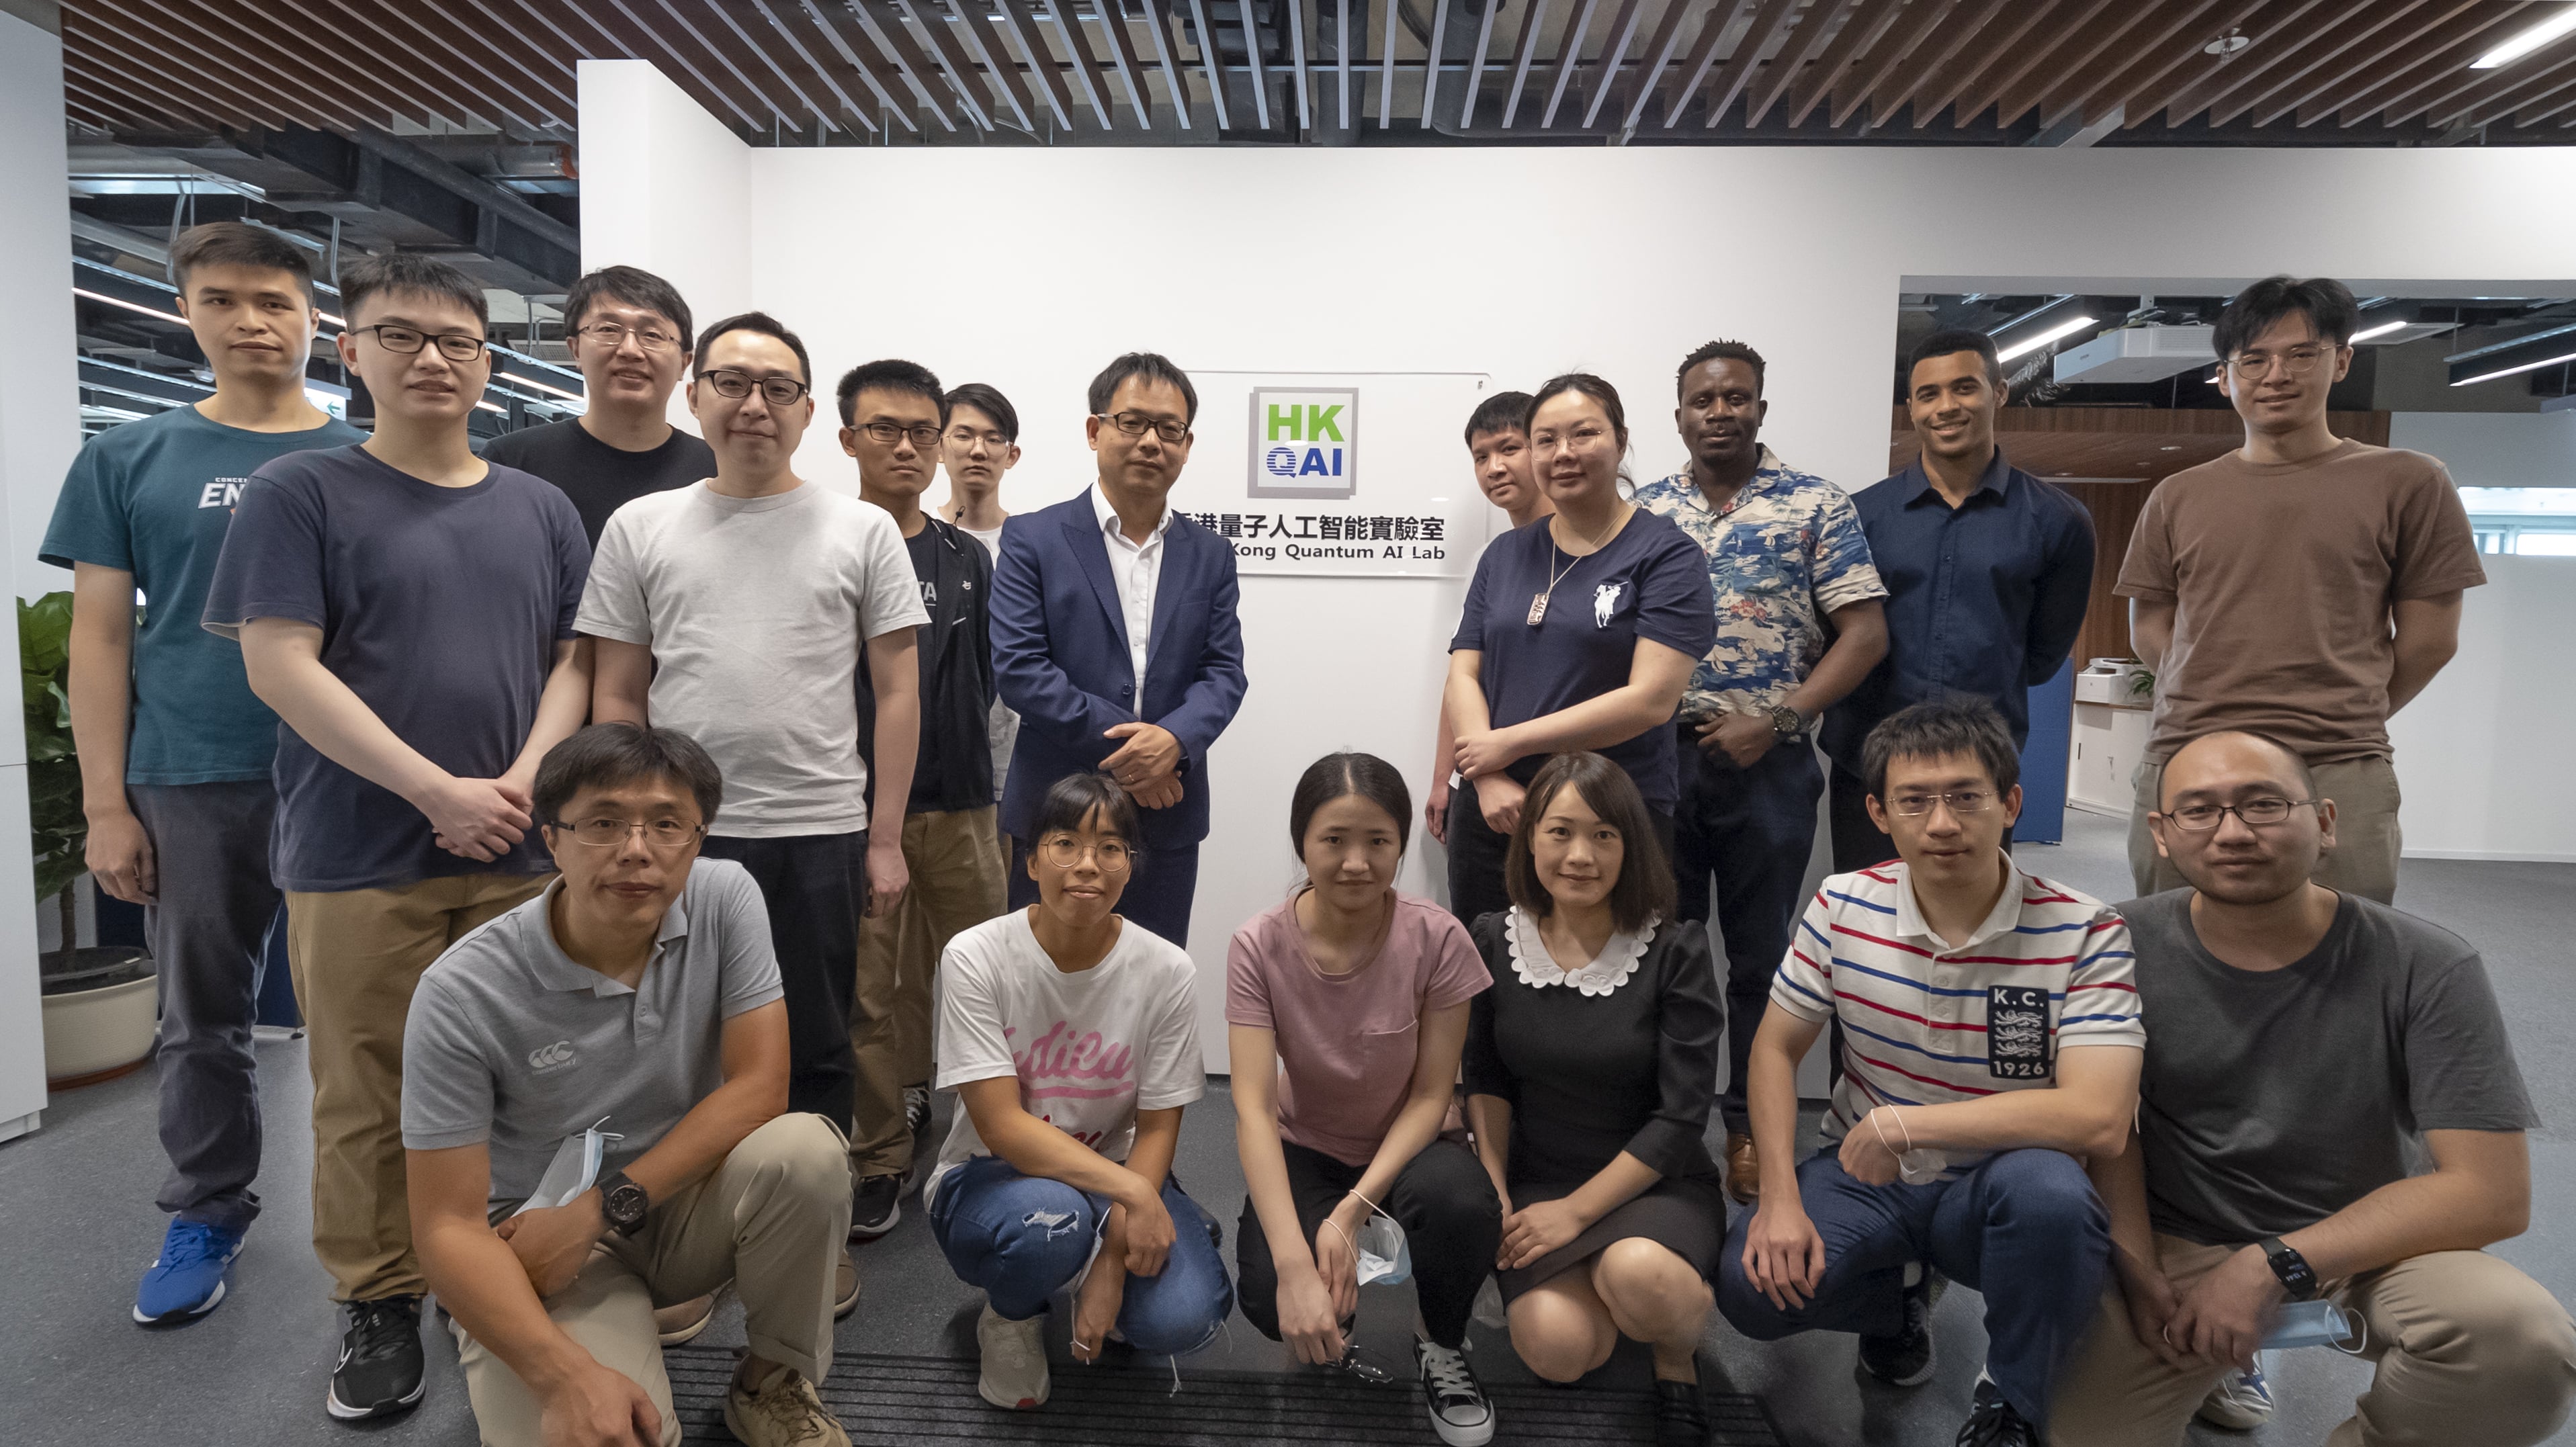 Team photo of the Centre of Hong Kong Quantum AI Lab.